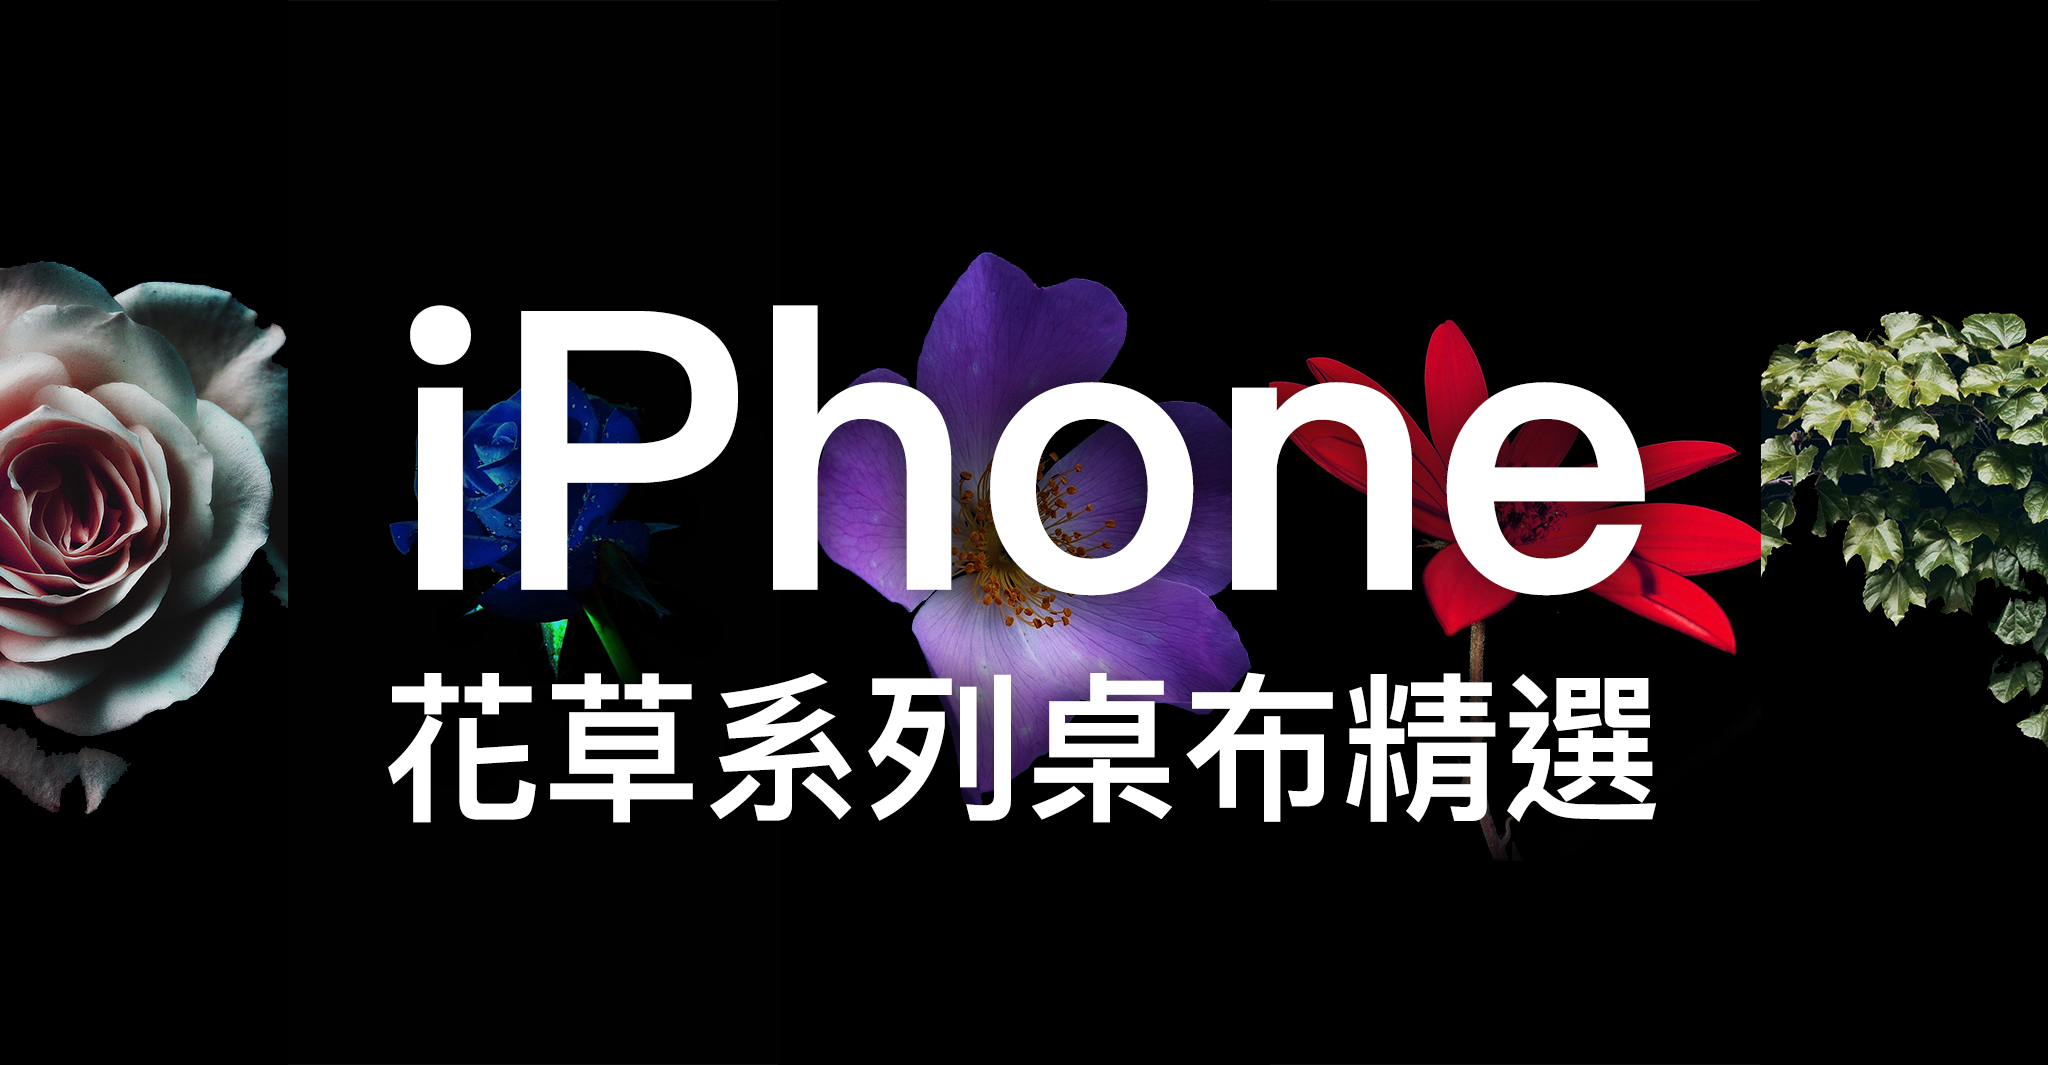 Iphone 桌布下載 精選 張花草系列iphone 桌布 蘋果仁 你的科技媒體